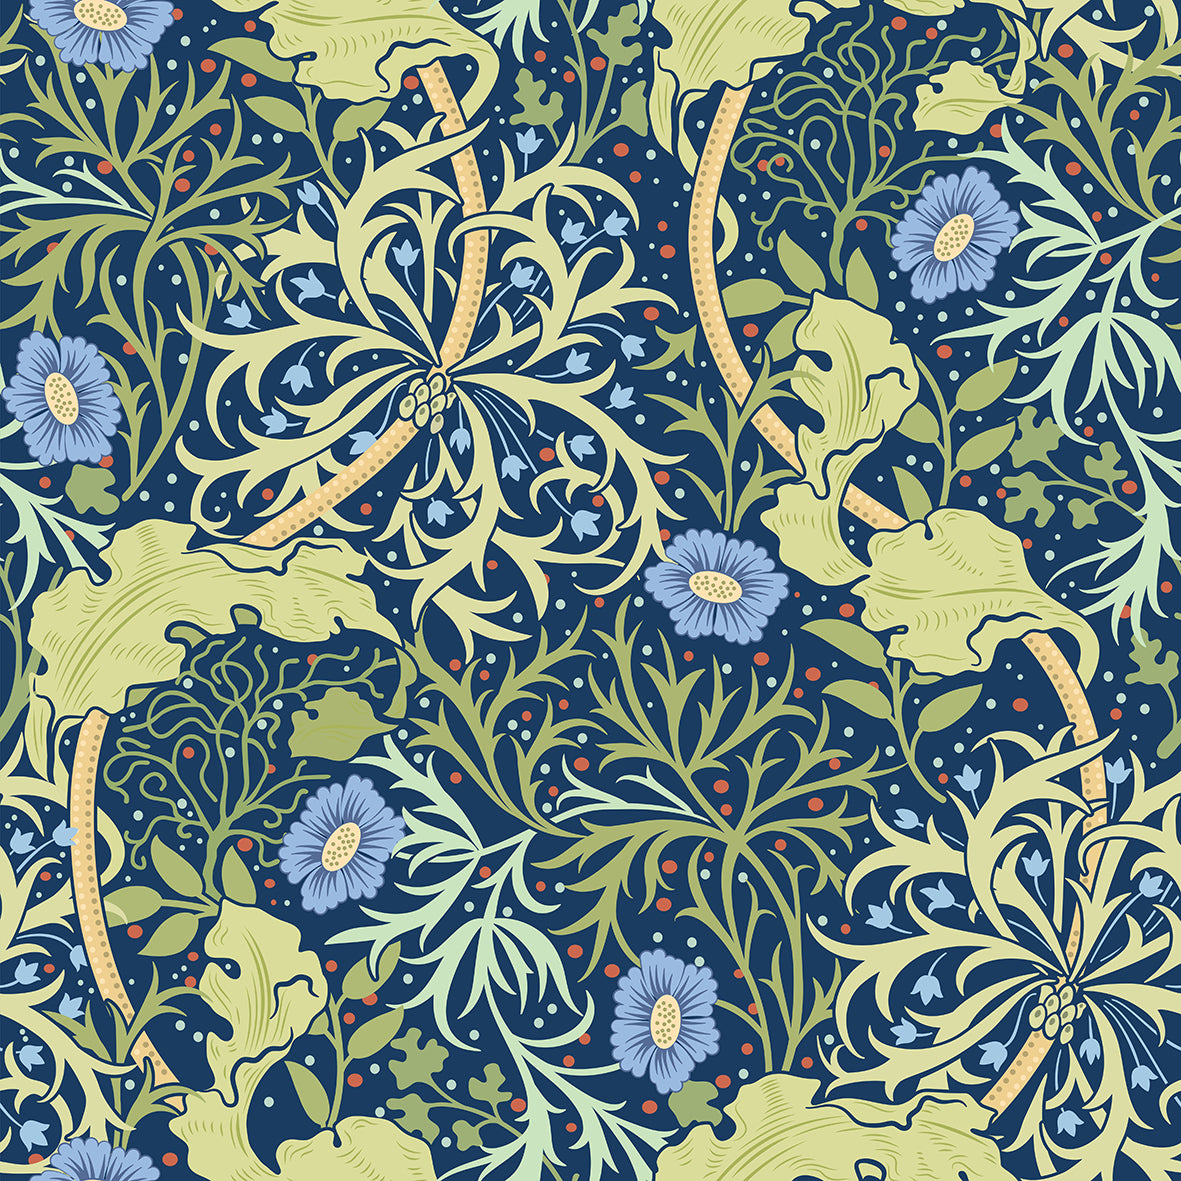 William Morris & Co Memory Foam Bath Mat - Seaweed Collection (Blue Flower)